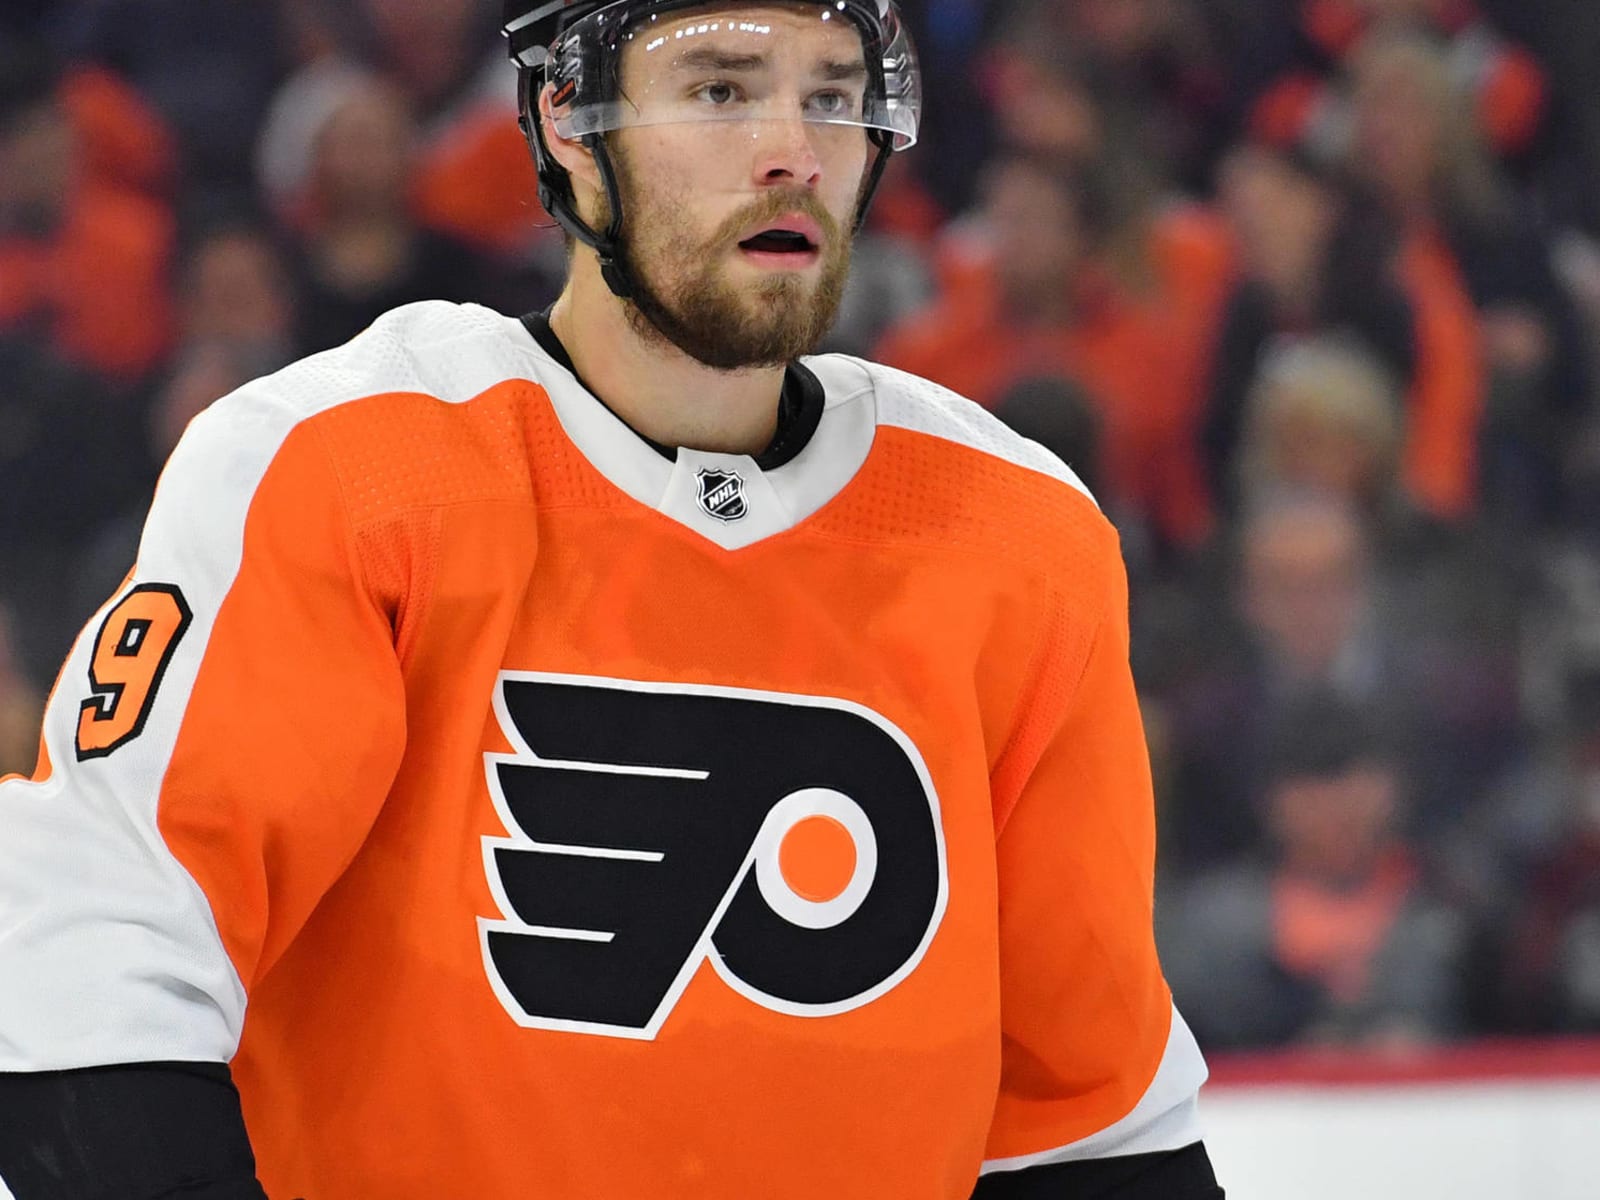 Ivan Provorov Philadelphia Flyers Signed Reverse Retro Adidas